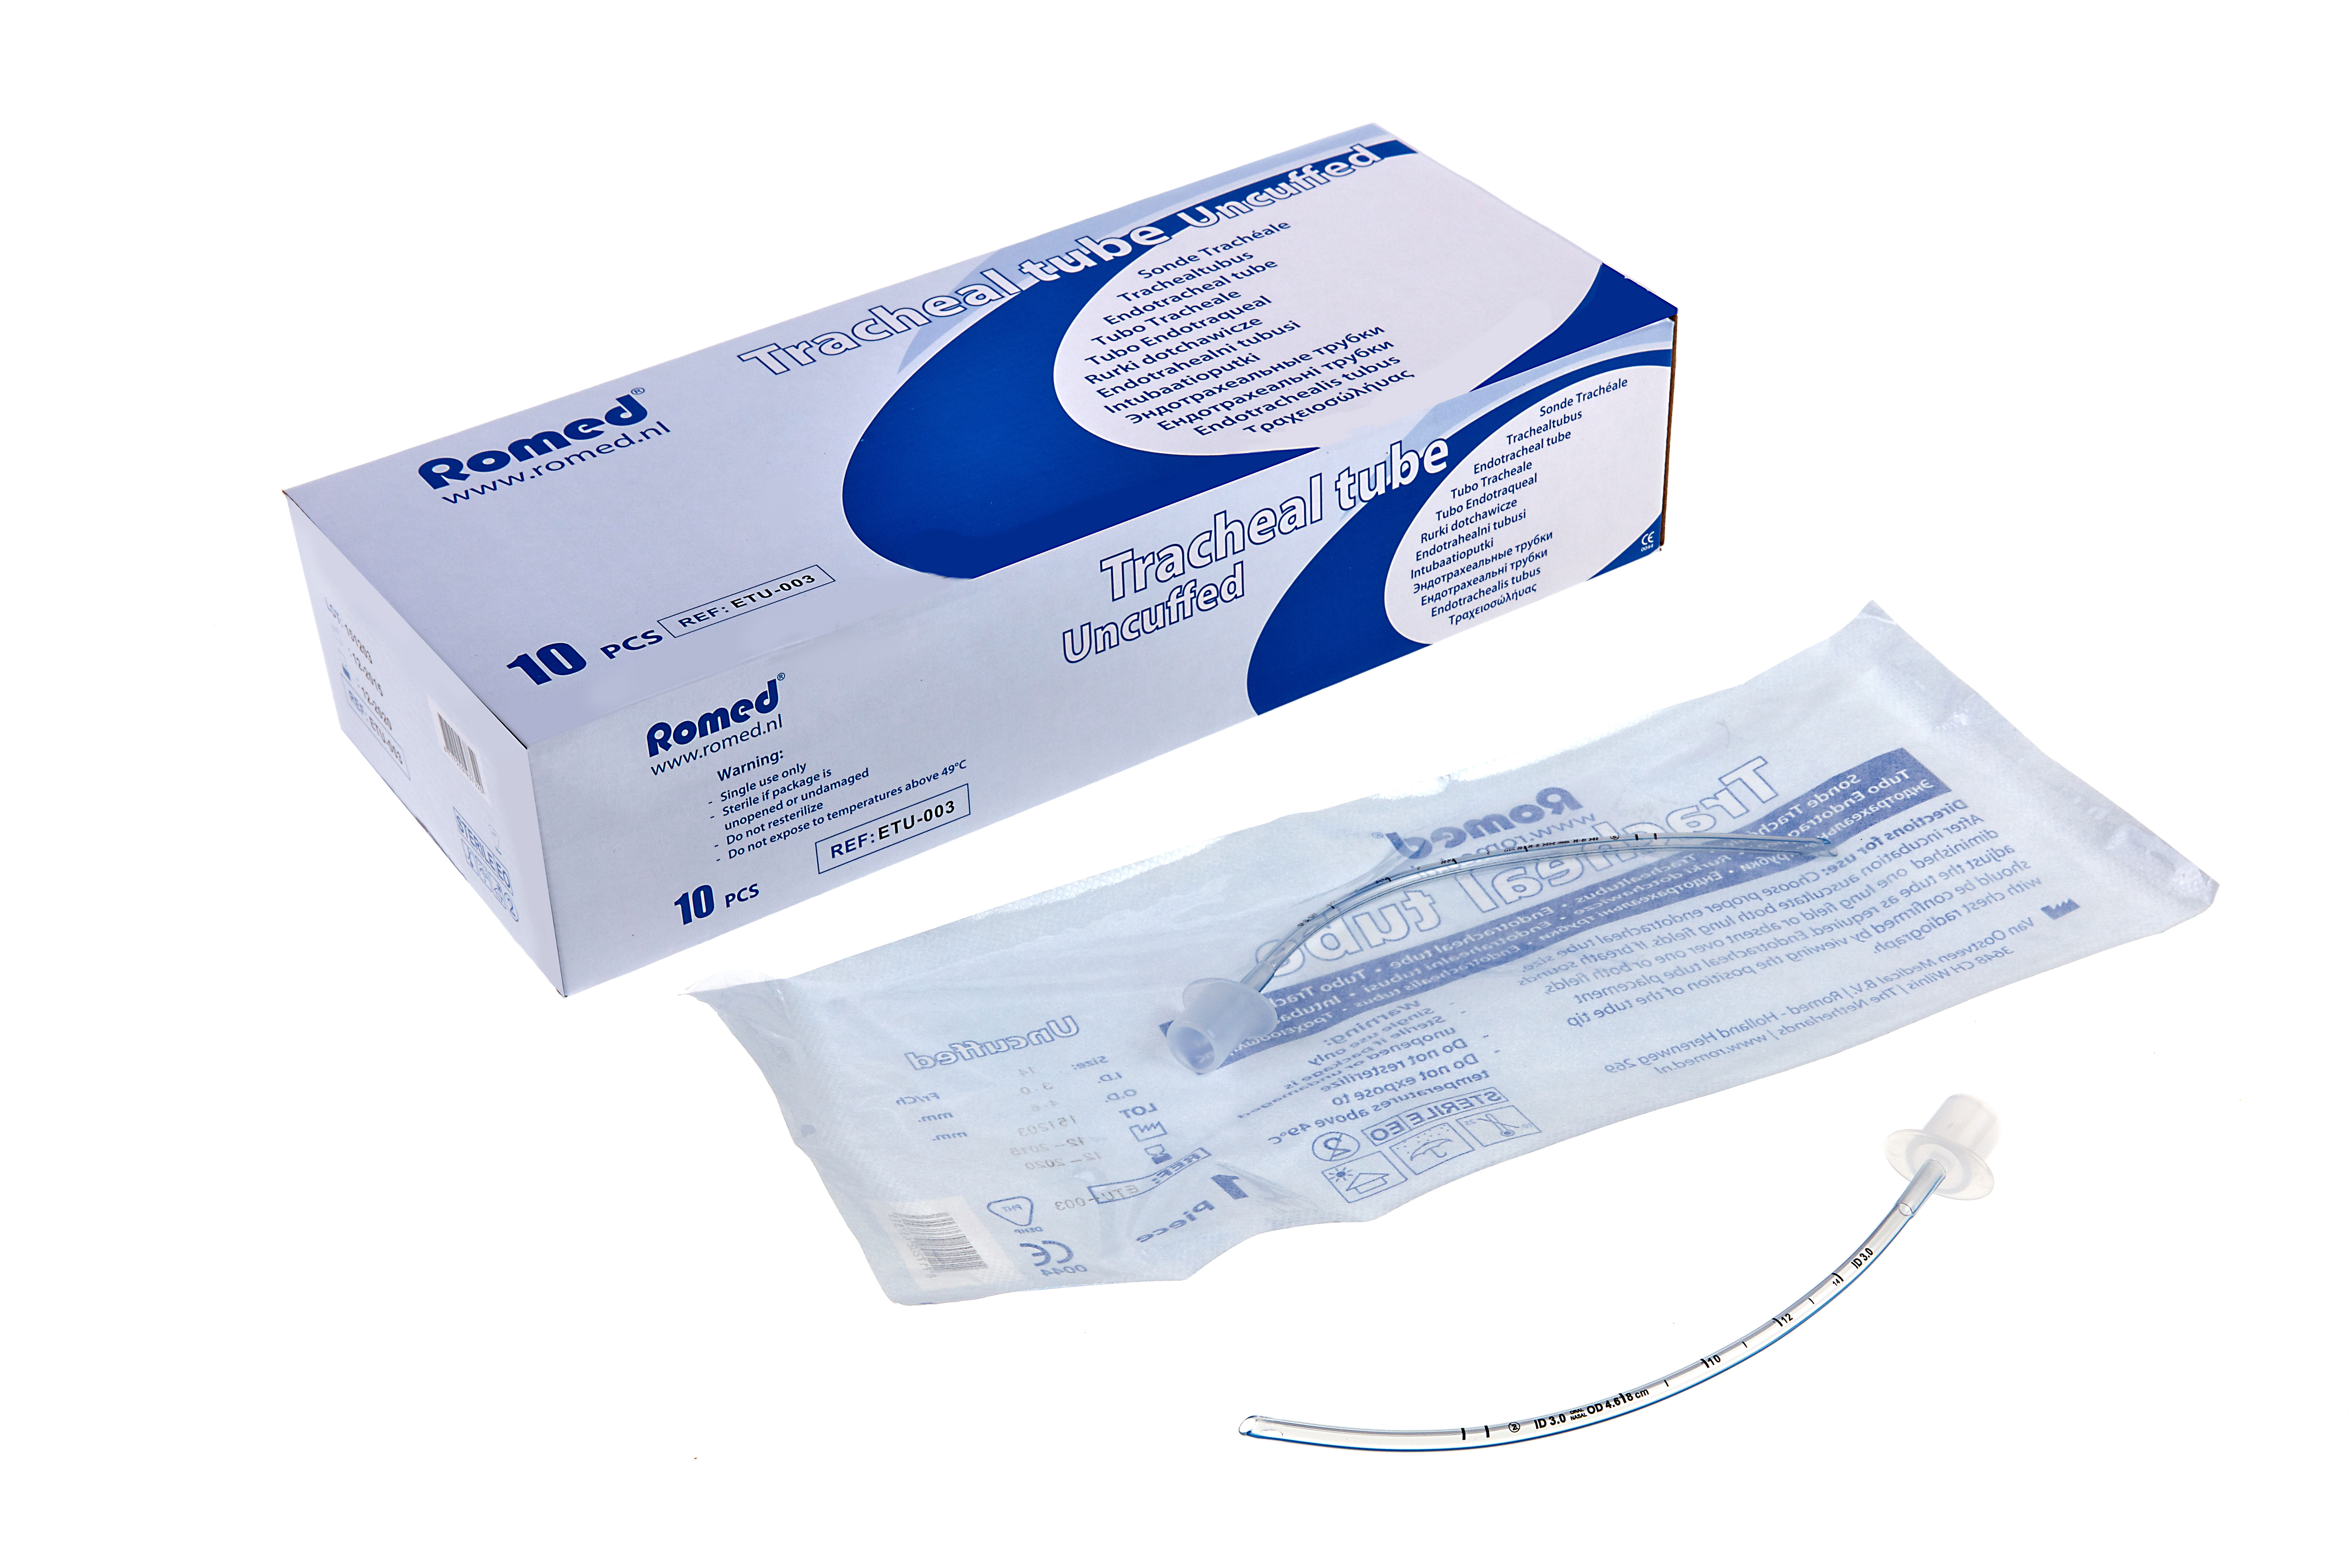 ETU-003 Romed endotracheal tubes, uncuffed, sterile, packed per piece, per 10 pcs in an inner box, 10 x 10 pcs = 100 pcs in a carton.